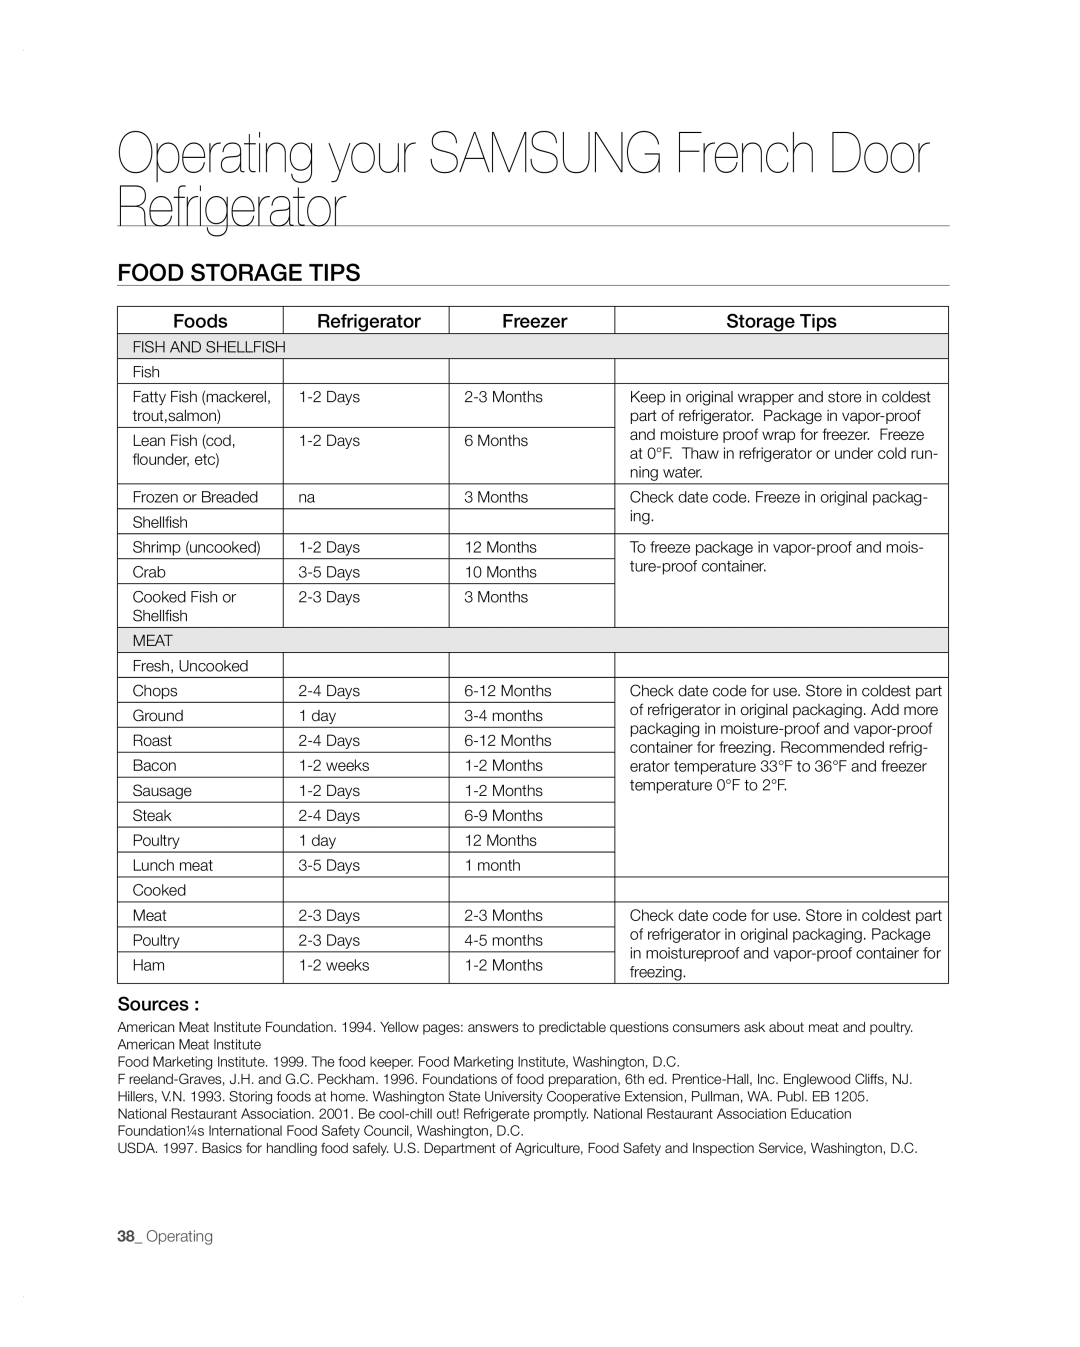 Samsung RFG297AARS/XAA Operating your SAMSUNG French Door Refrigerator, Food Storage Tips, Foods, Freezer, Sources 